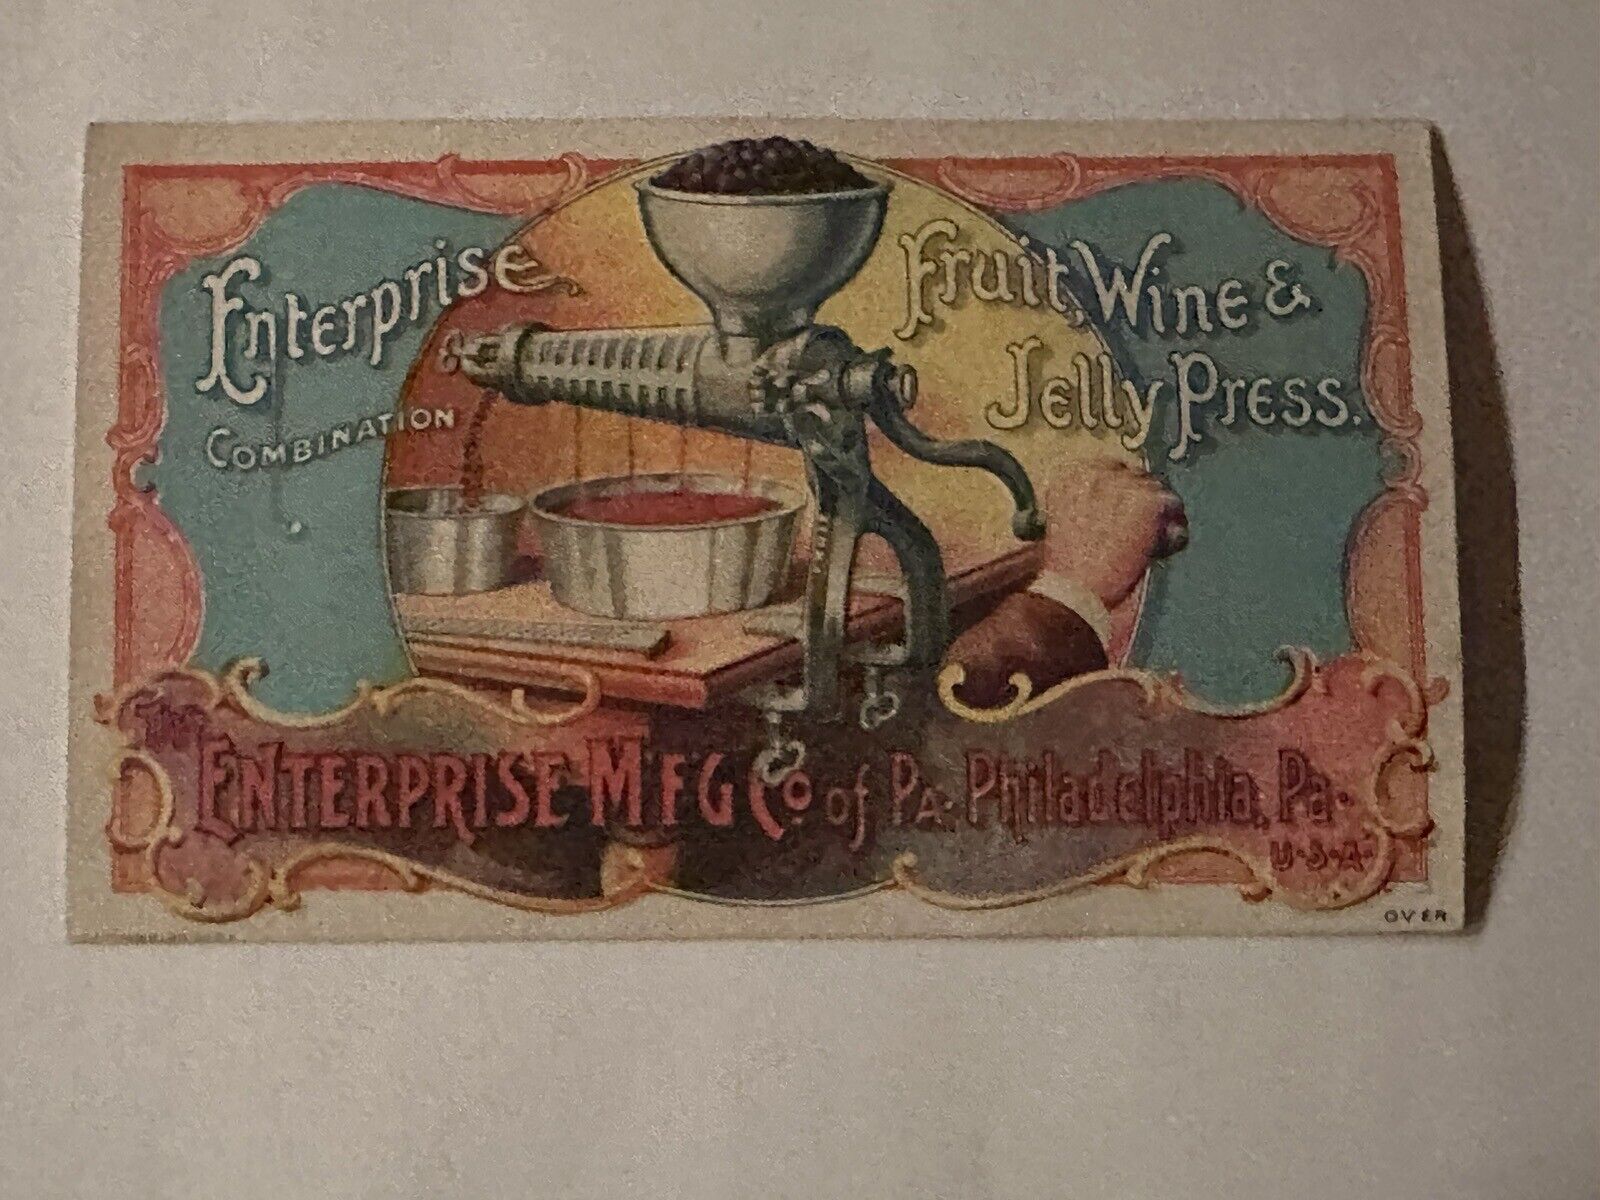 RARE Antique ENTERPRISE Fruit, Wine & Jelly Pres - 1890's - Victorian Trade Card